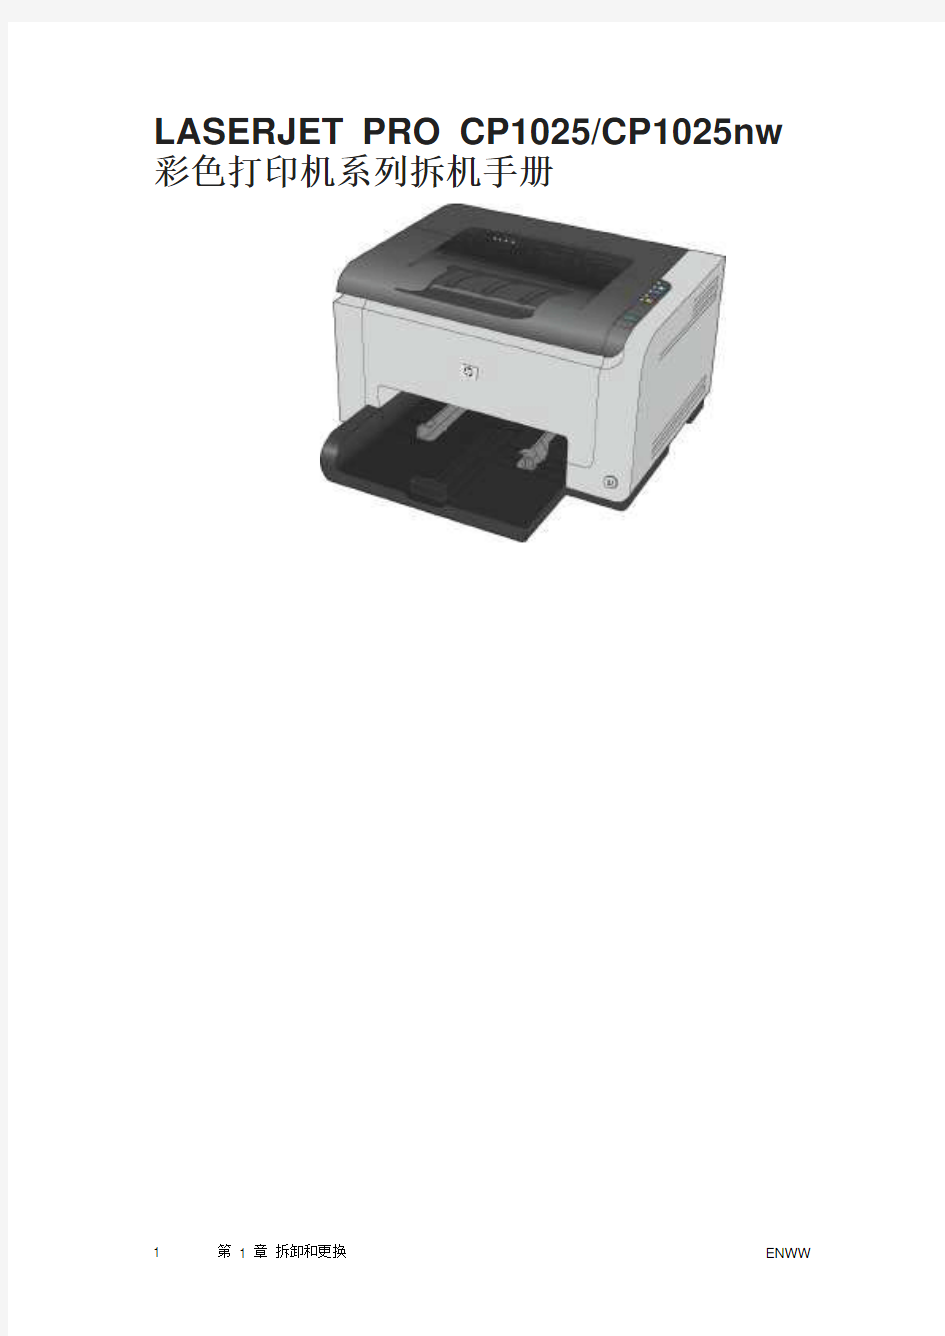 CP1025 CP1025nw 彩色打印机系列拆机手册